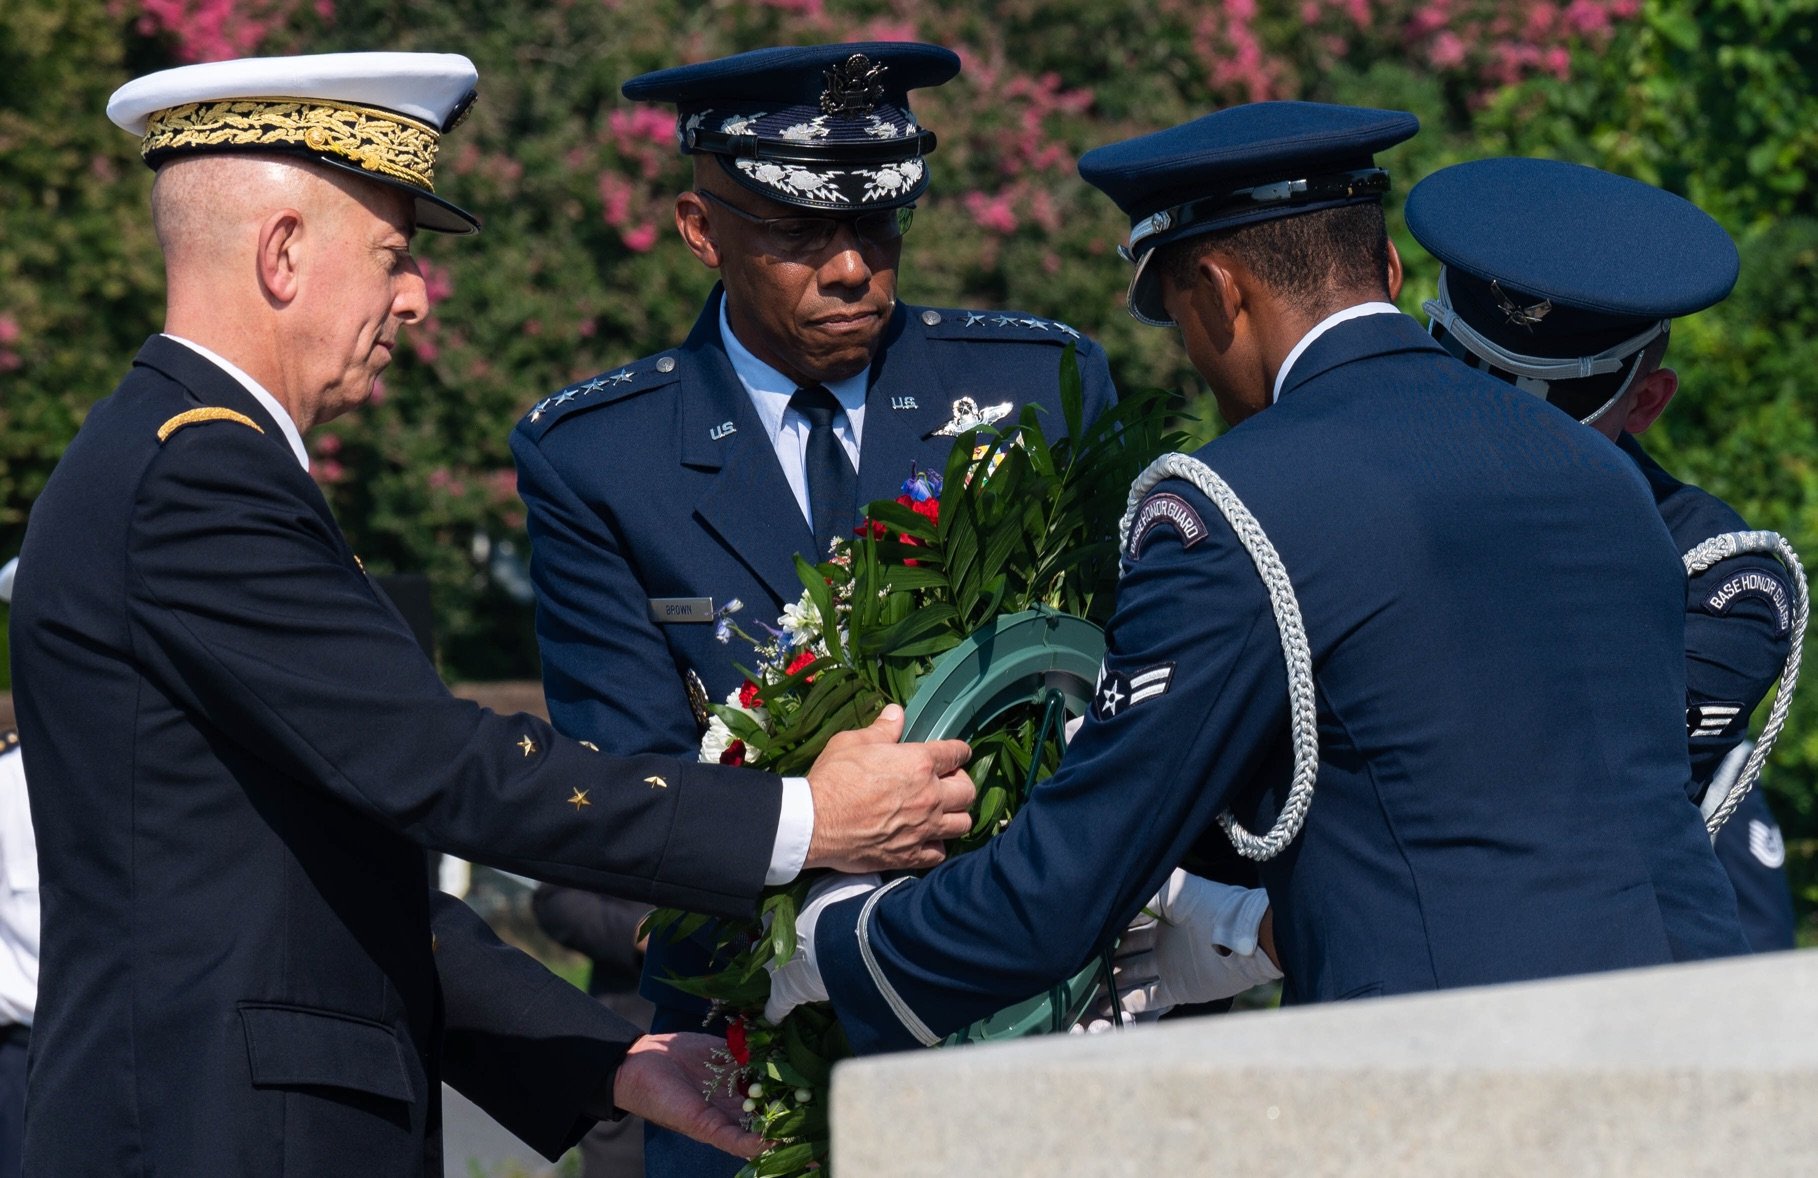 ODU honors military members > Joint Base Langley-Eustis > Article Display